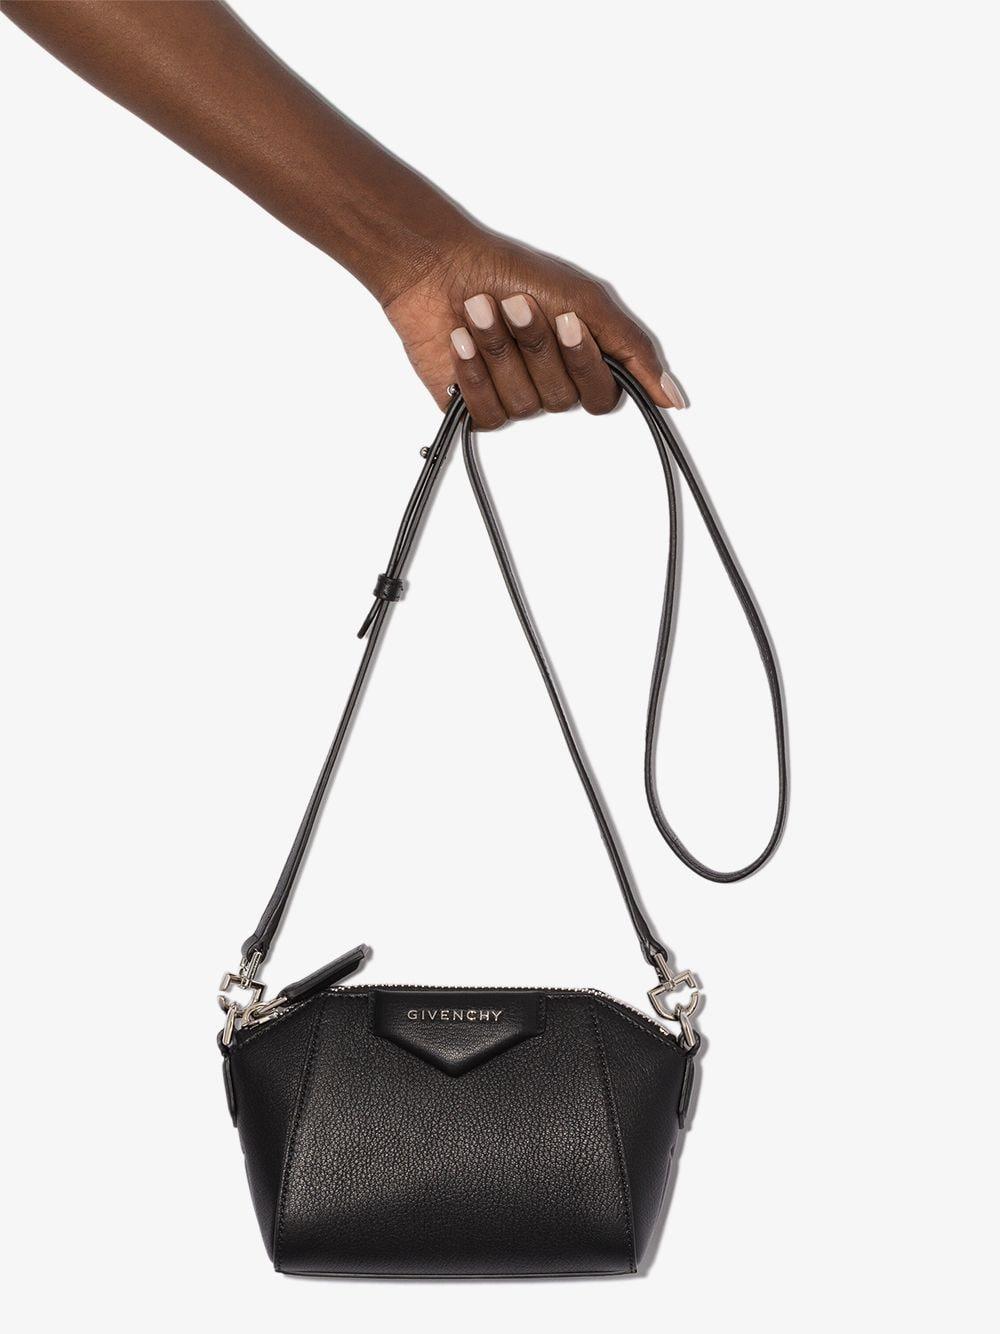 Givenchy Nano Antigona Mini Crossbody Leather Bag in Black | Lyst